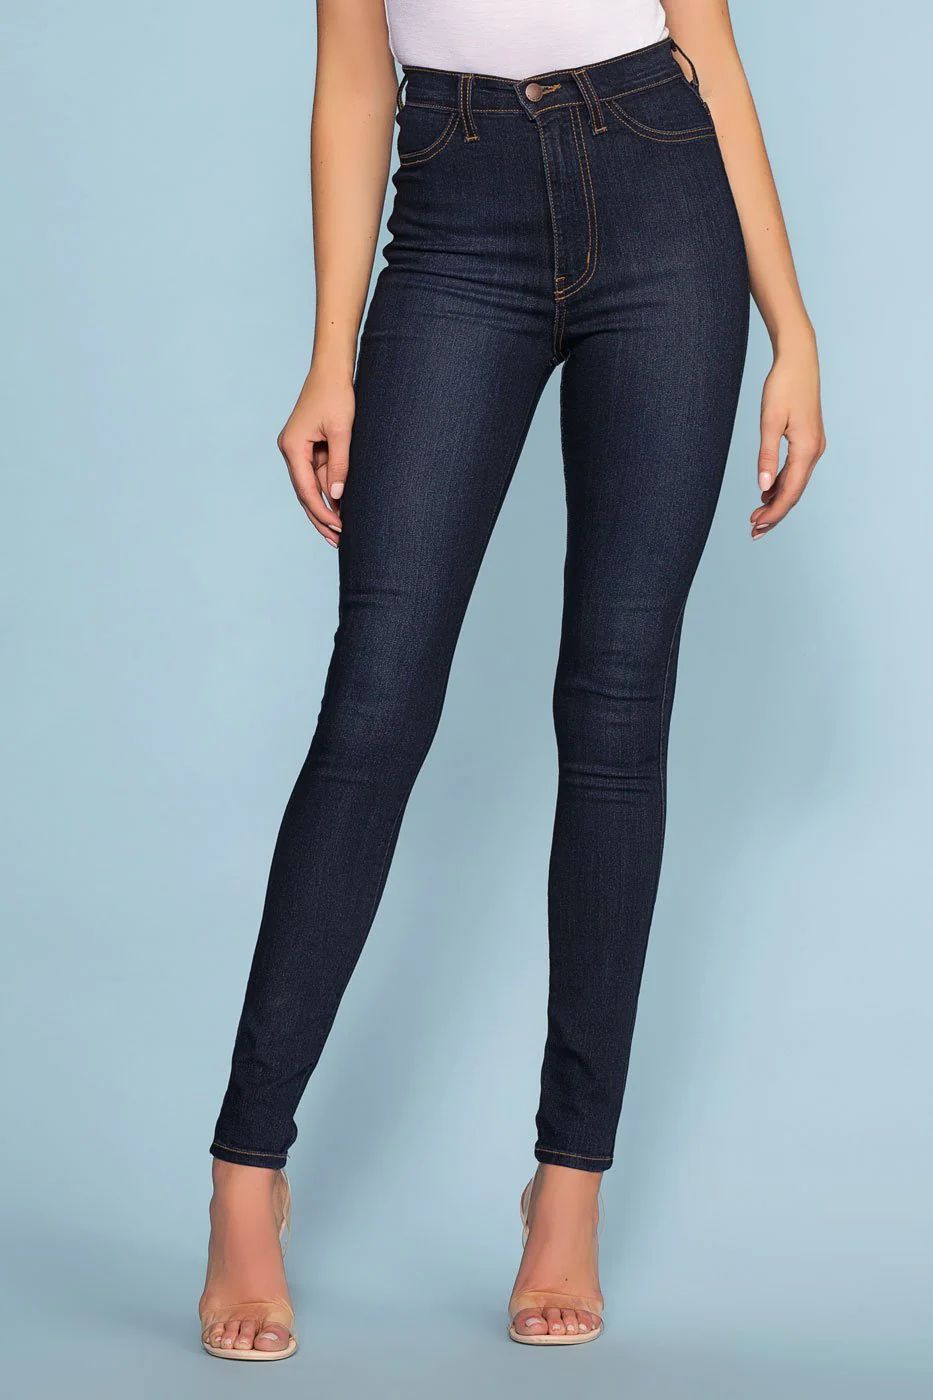 Mika High Waisted Jeans - Dark Wash | Shop Priceless